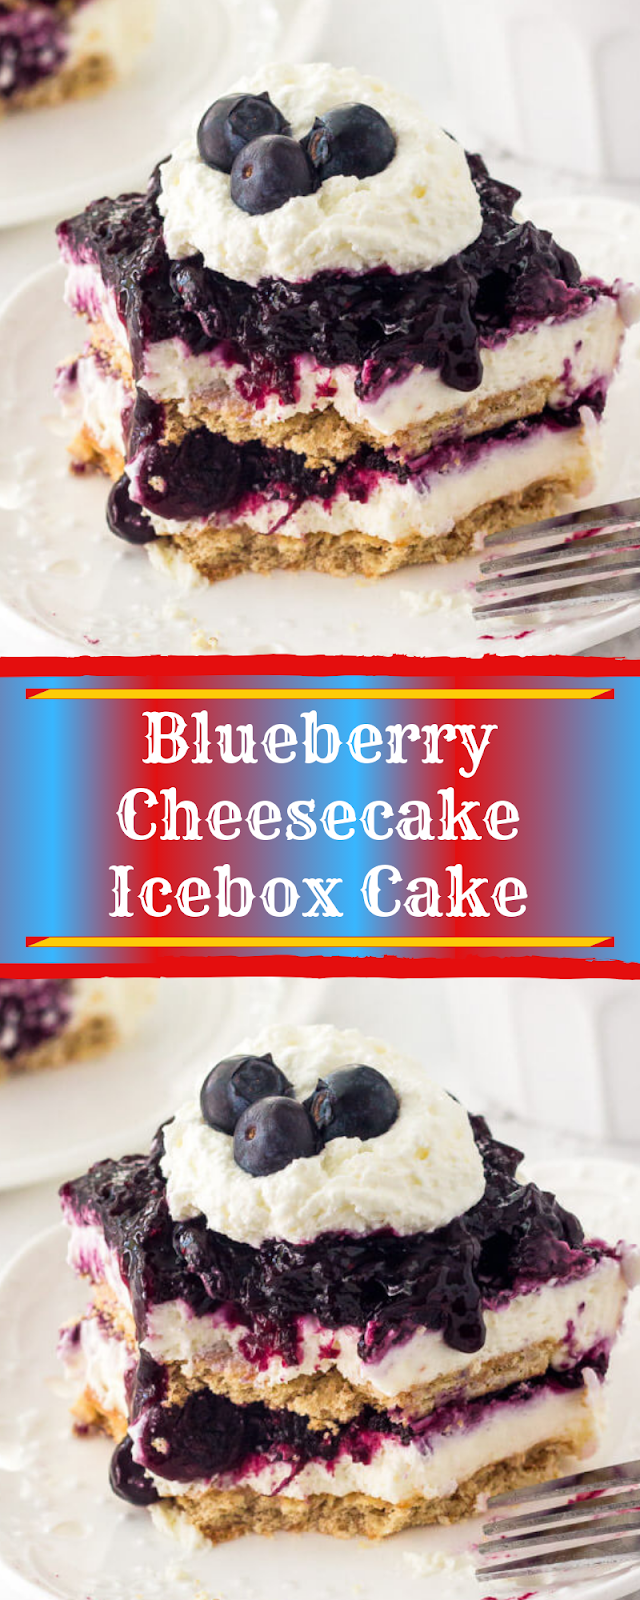 Blueberry Cheesecake Icebox Cake